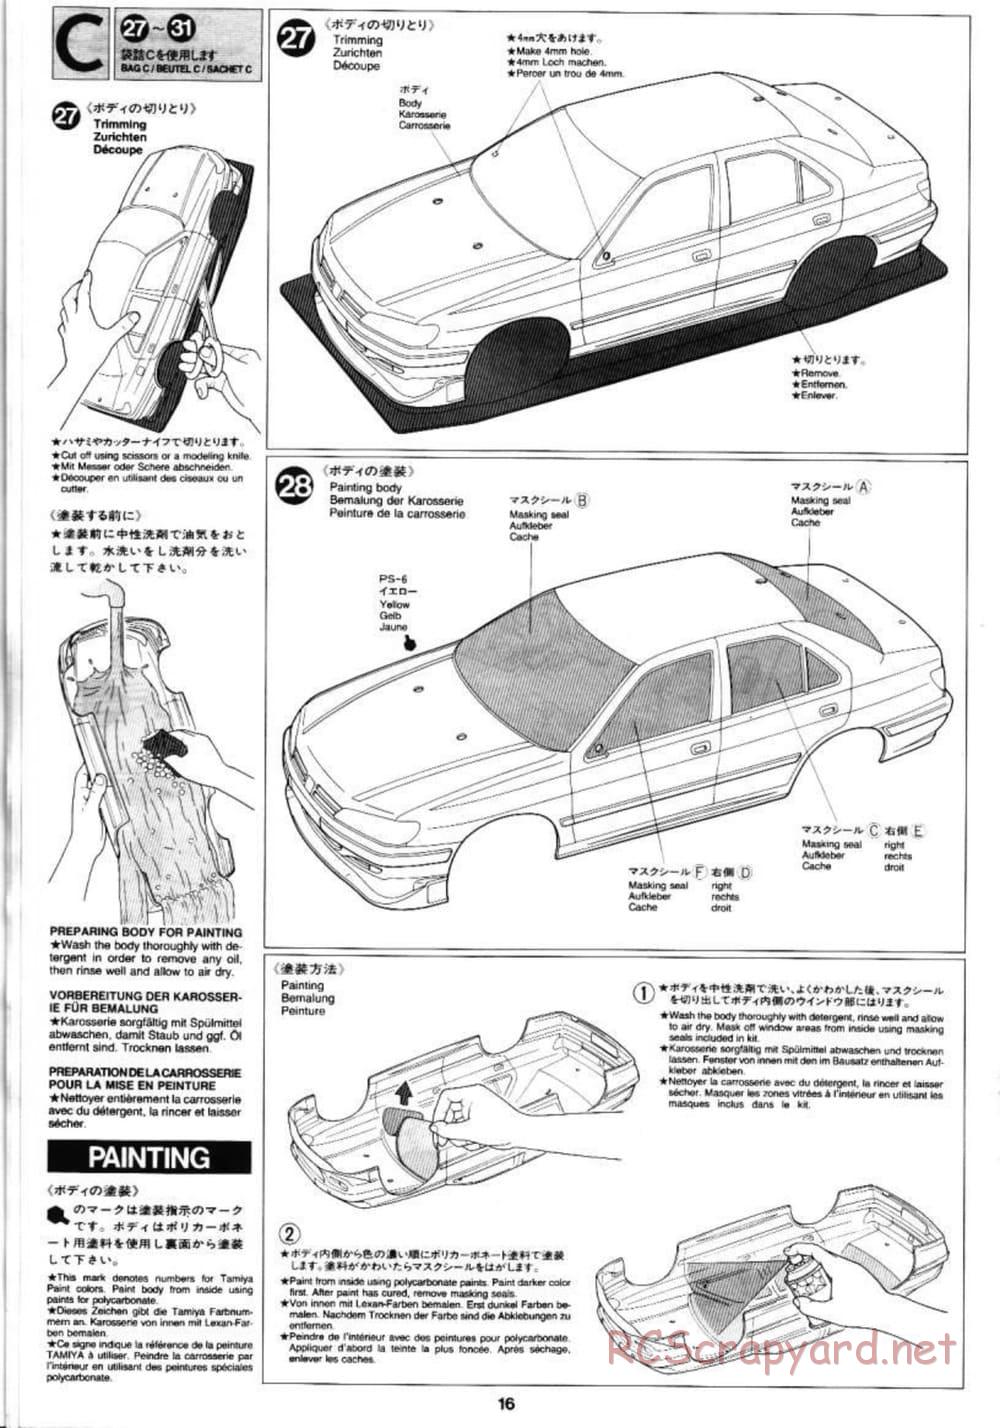 Tamiya - Peugeot 406 ST - TL-01 Chassis - Manual - Page 16